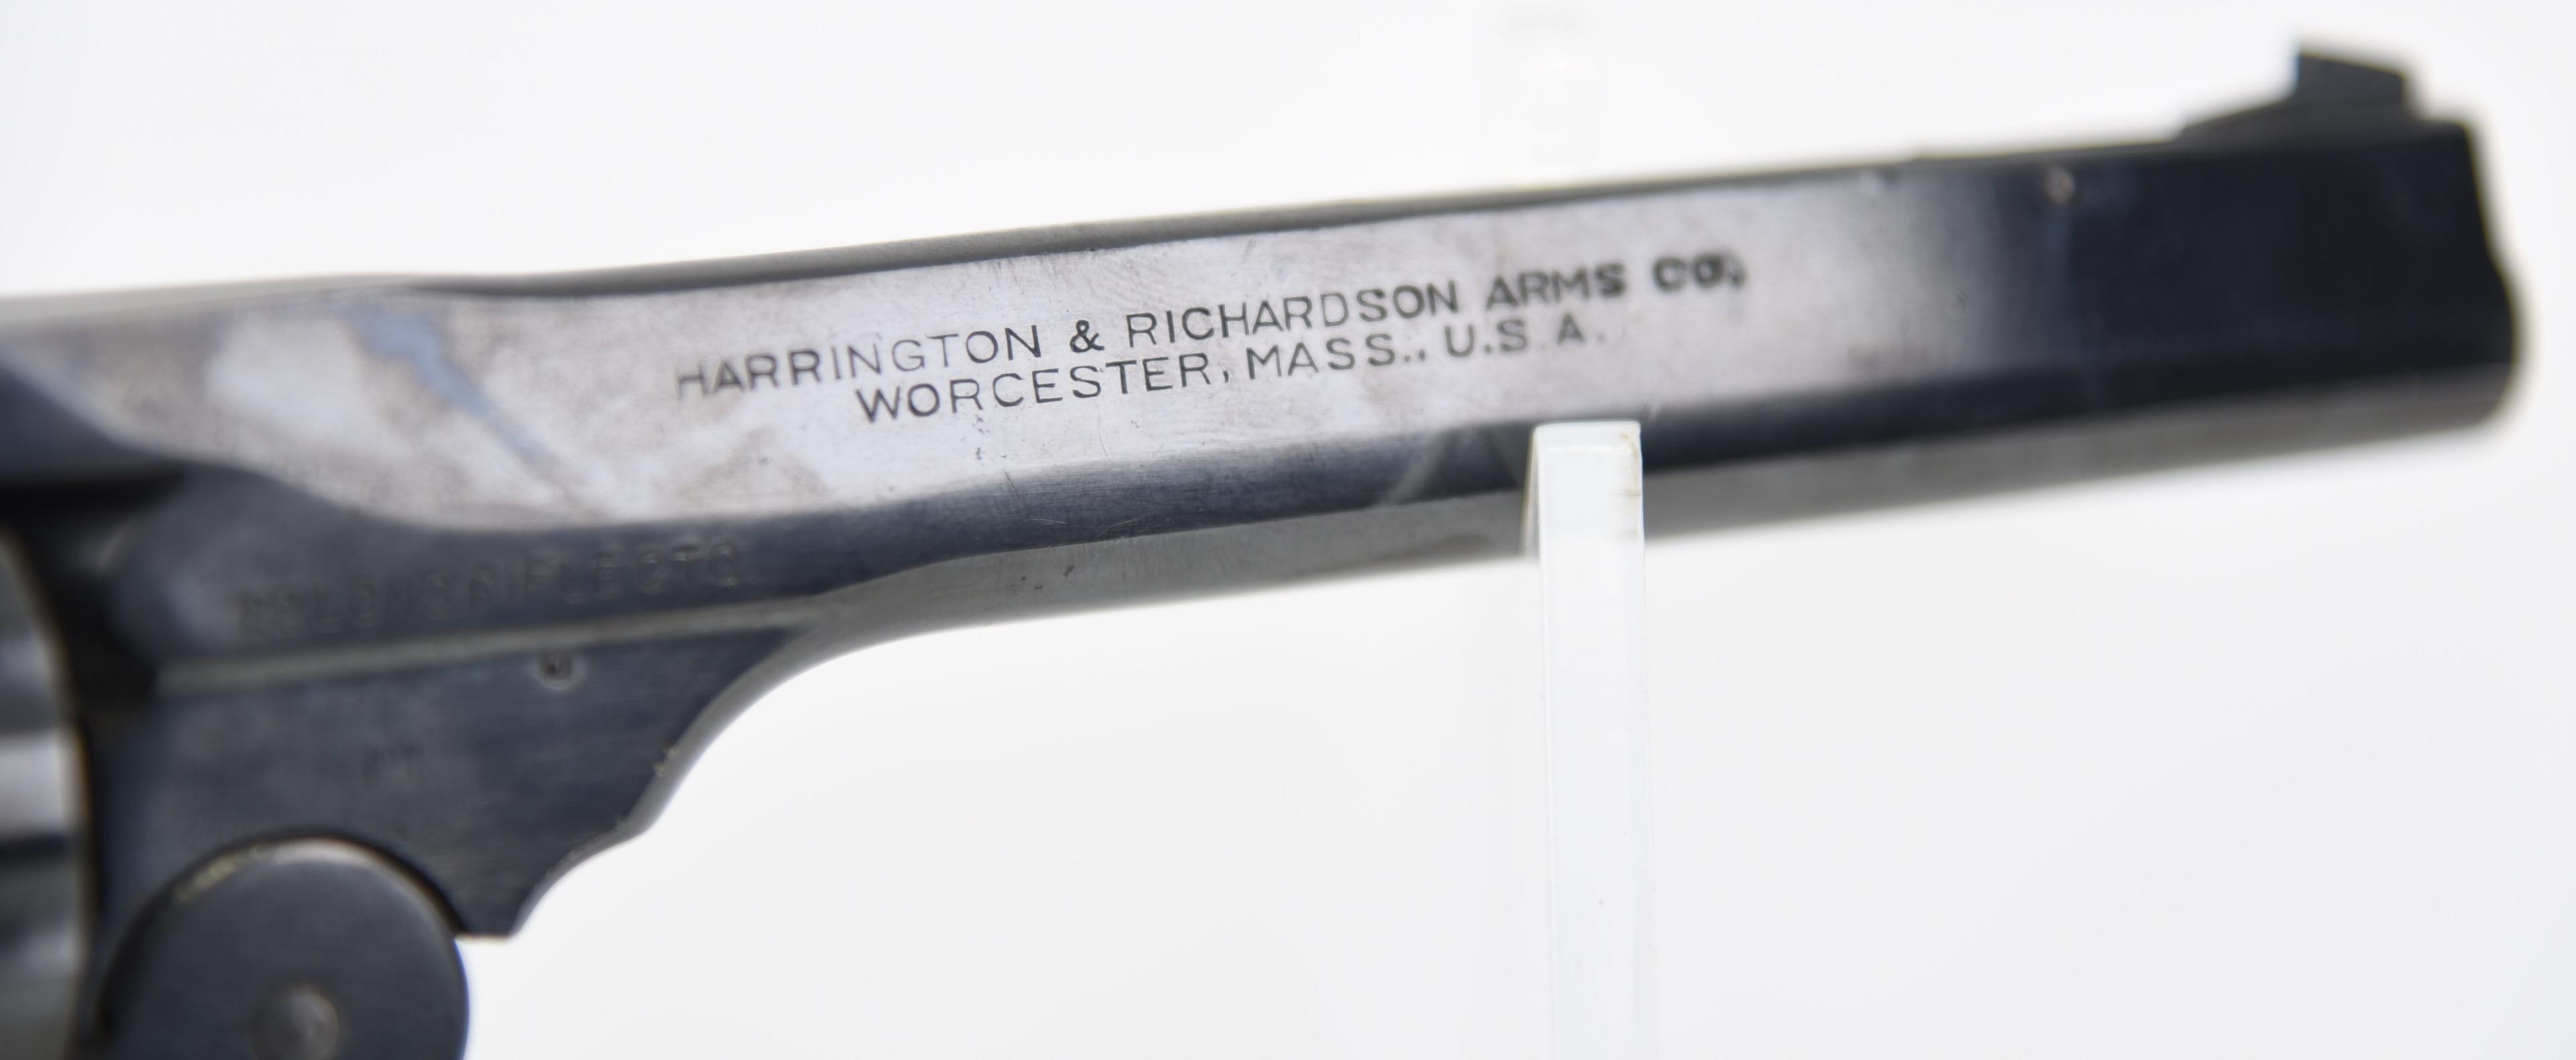 Harrington & Richardson Arms Co Sportsman DA Mdl 999 Dbl Action Revolver .22 LR REGULATED/C&R